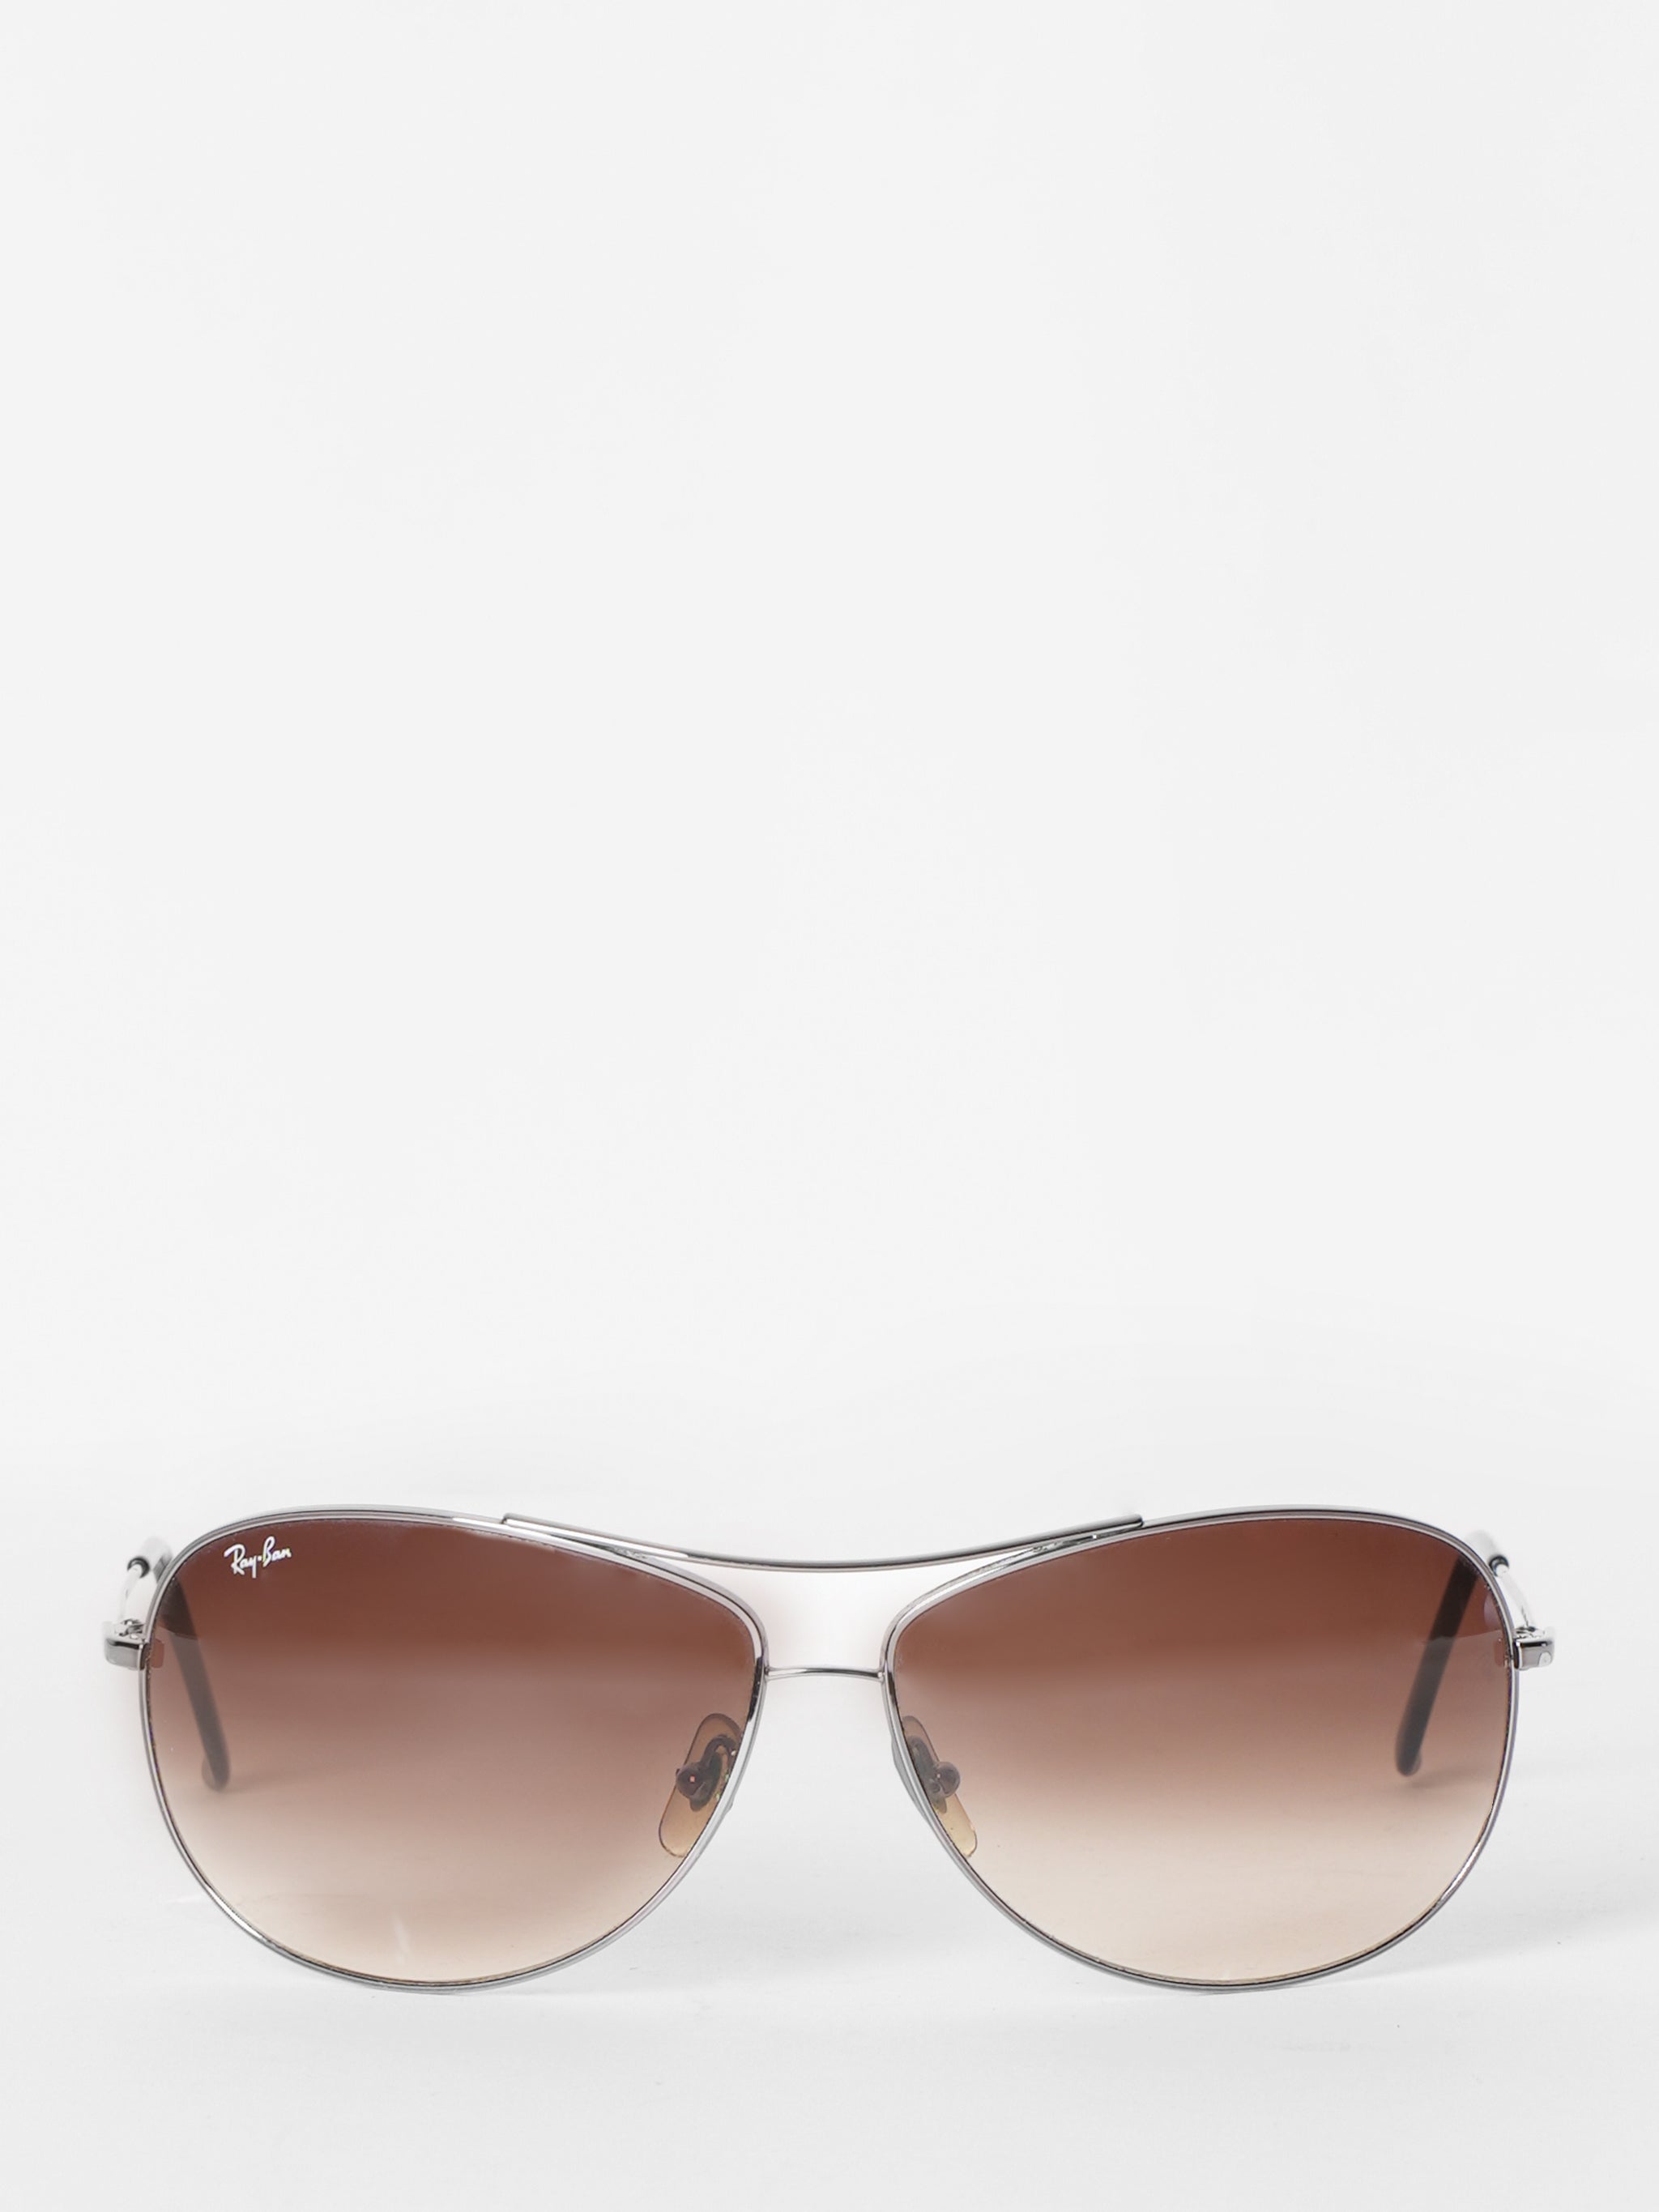 Rayban Brown Shade Sunglasses